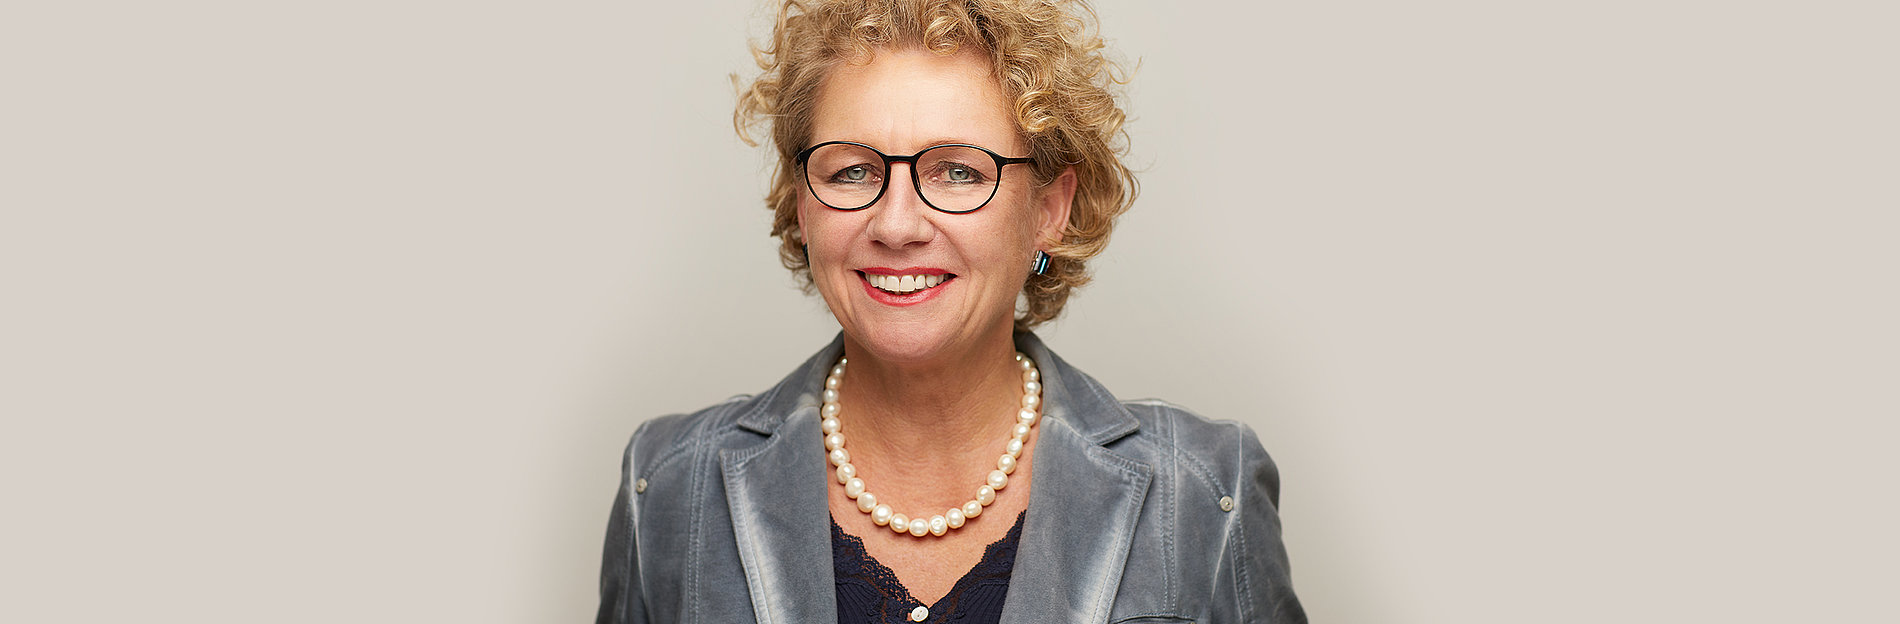 Dr. Marisol Bock